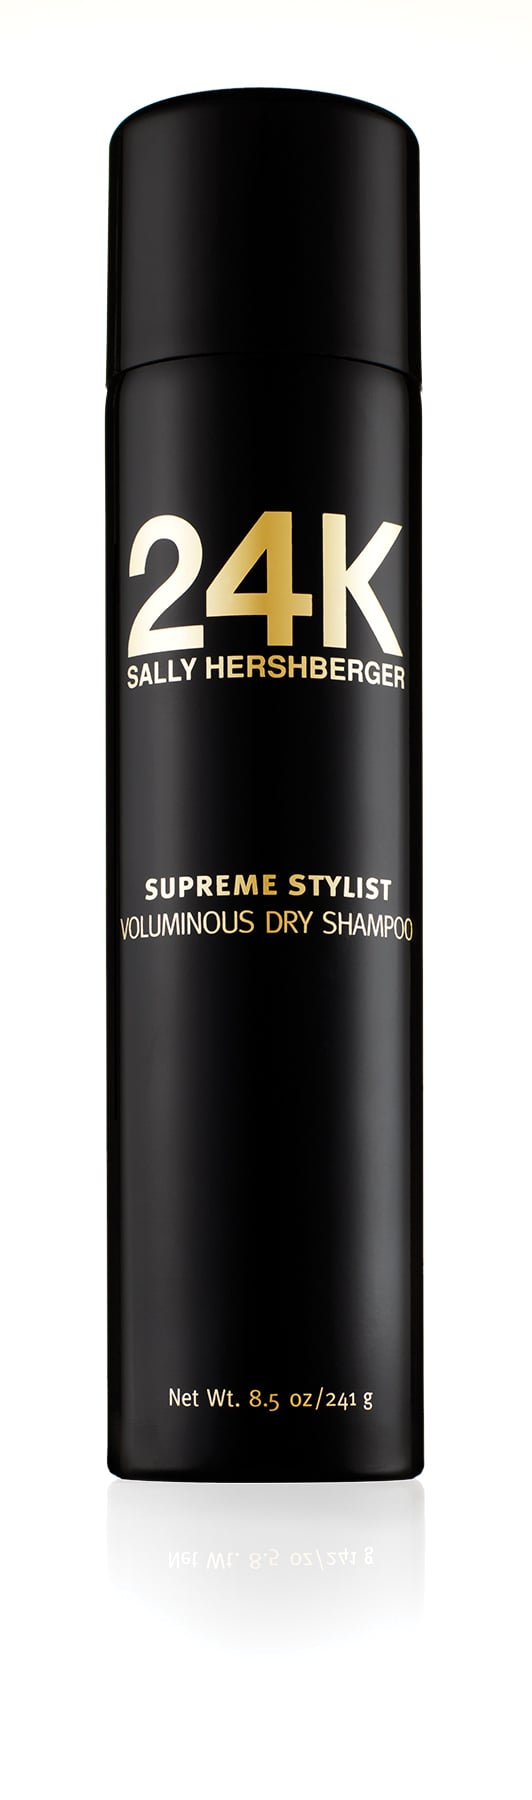 Sally Hershberger 24K Supreme Stylist Voluminous Dry Shampoo